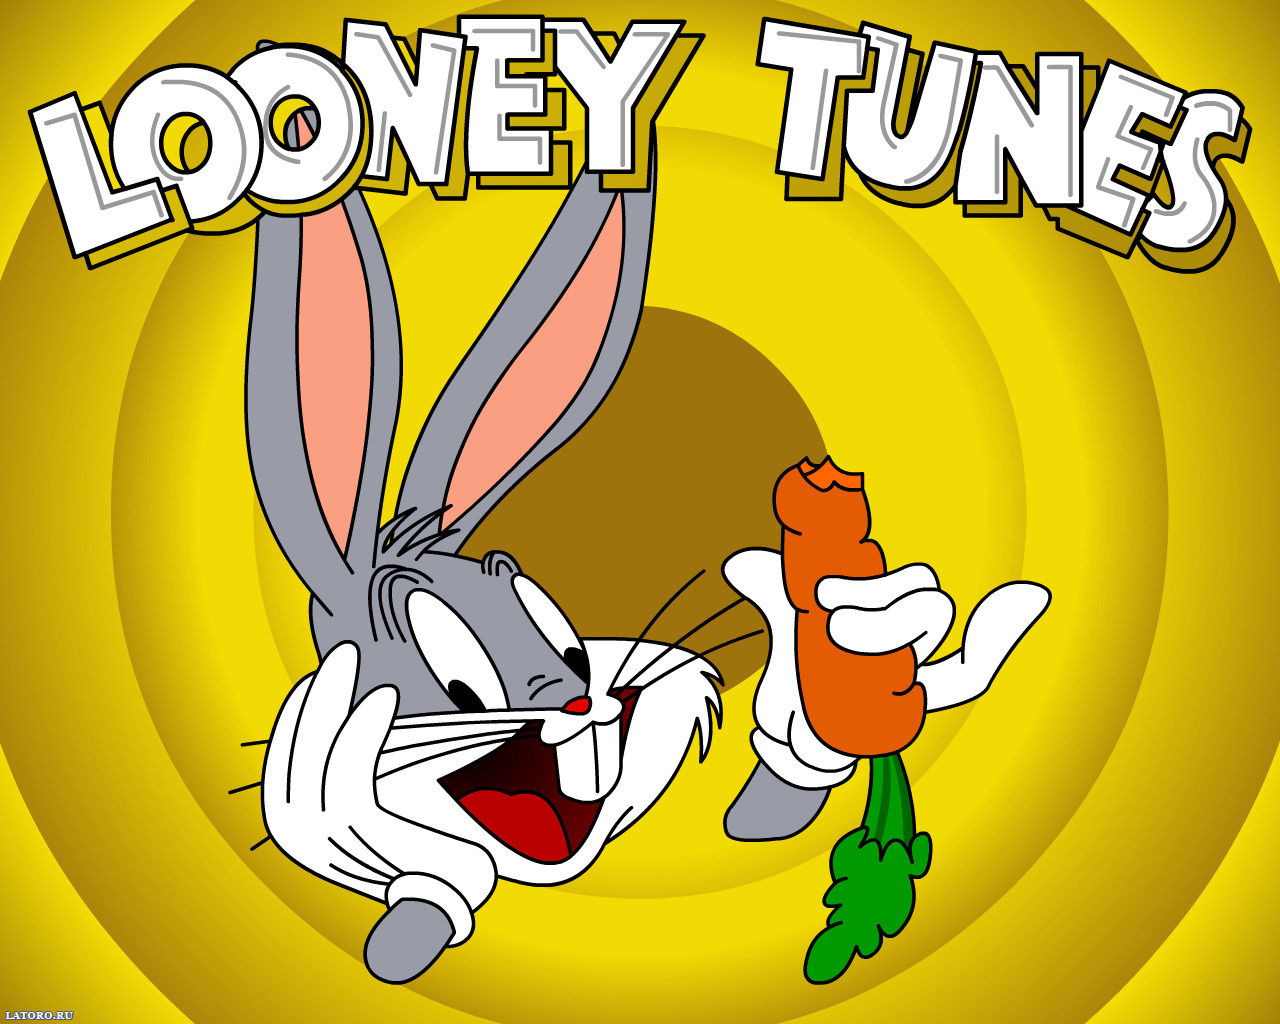 Looney Tunes Bugs Bunny Desktop Wallpaper On Latoro